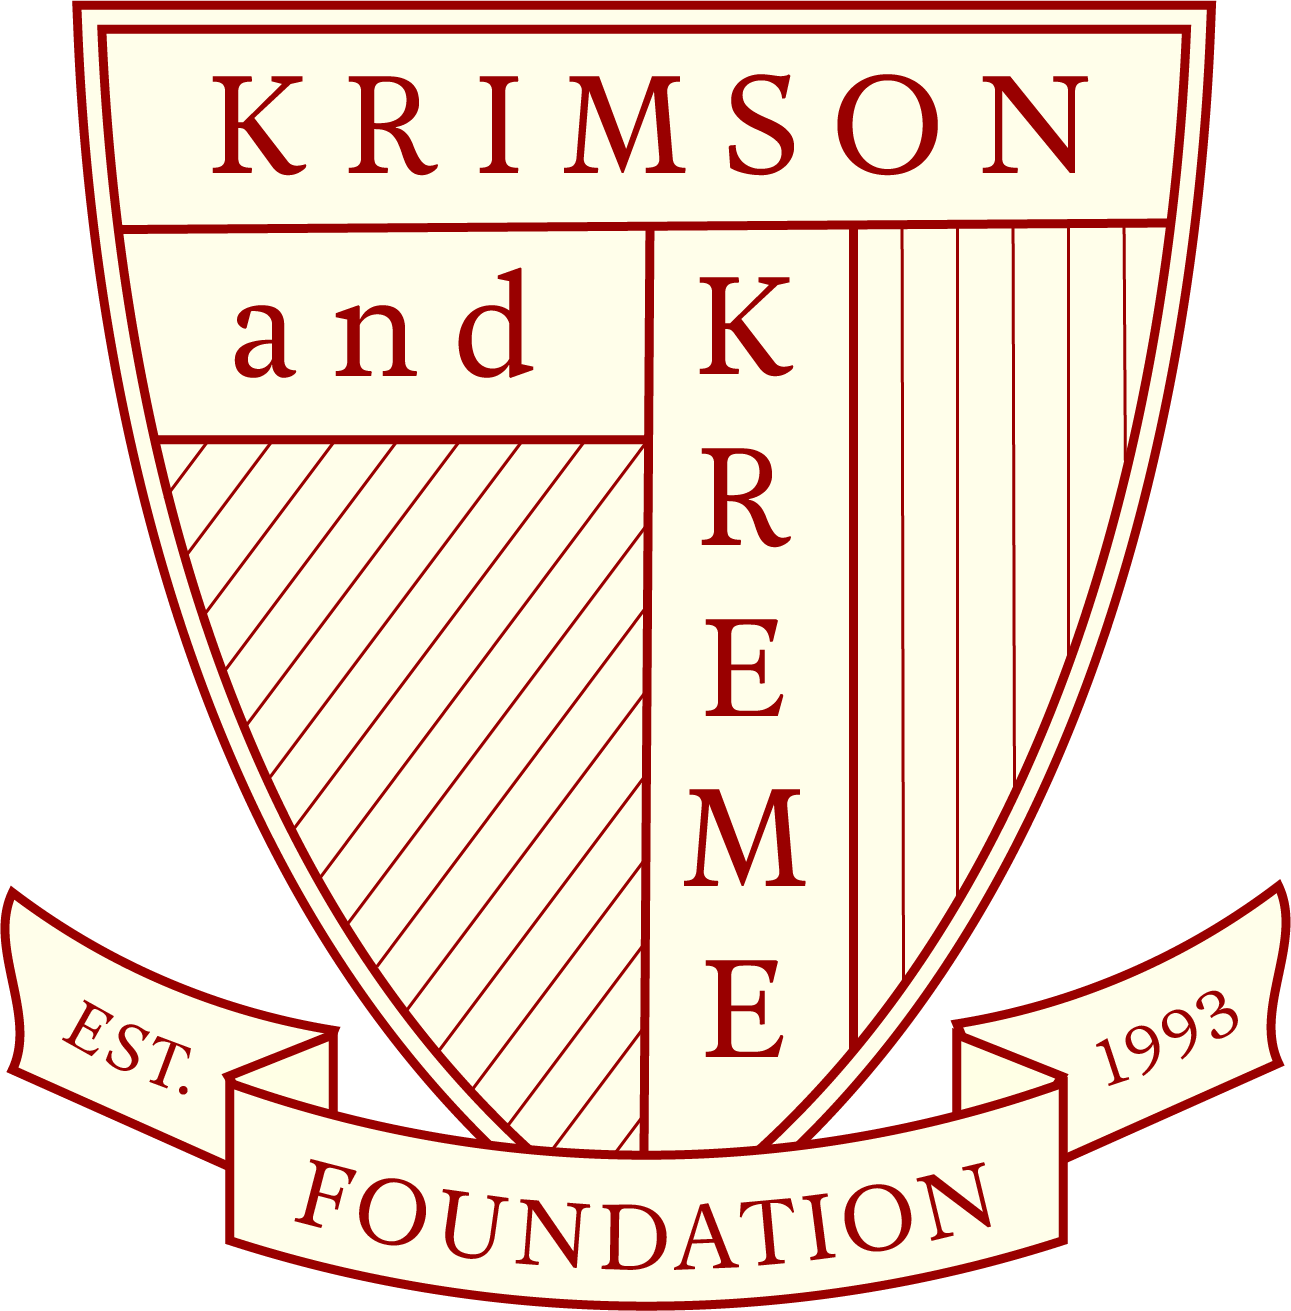 KRIMSON and KREME FOUNDATION